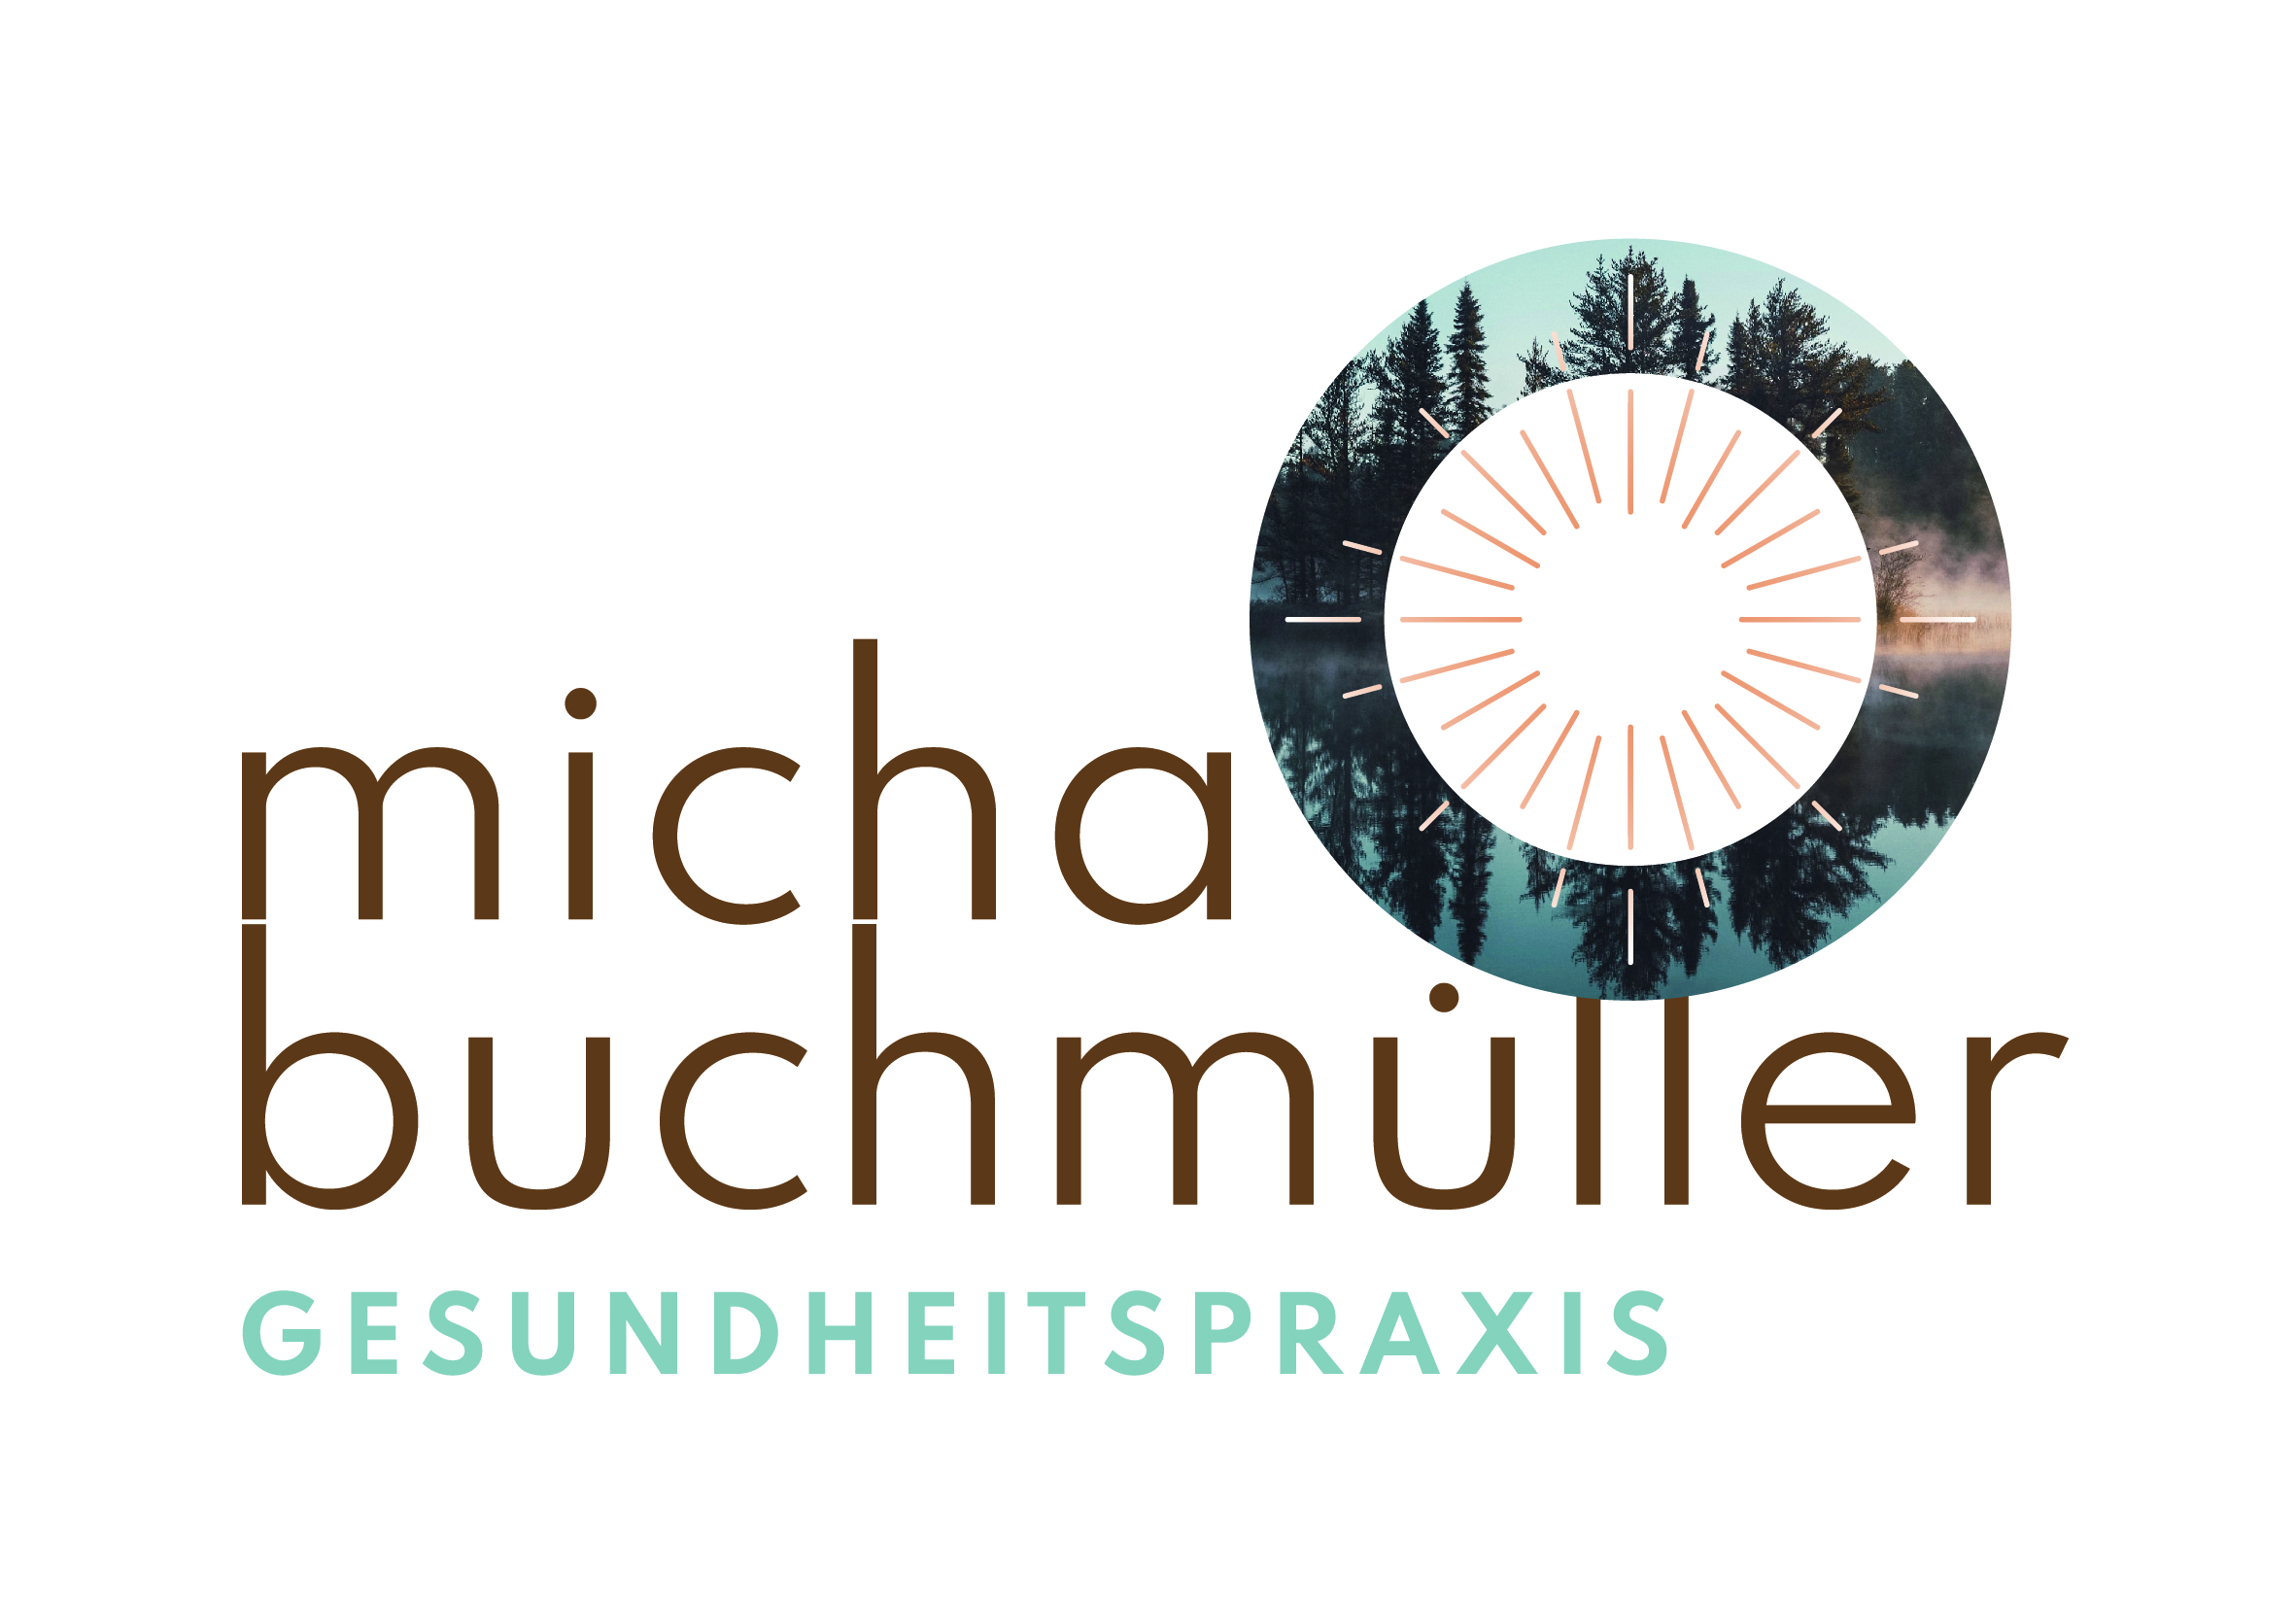 Gesundheitspraxis Micha Buchmüller